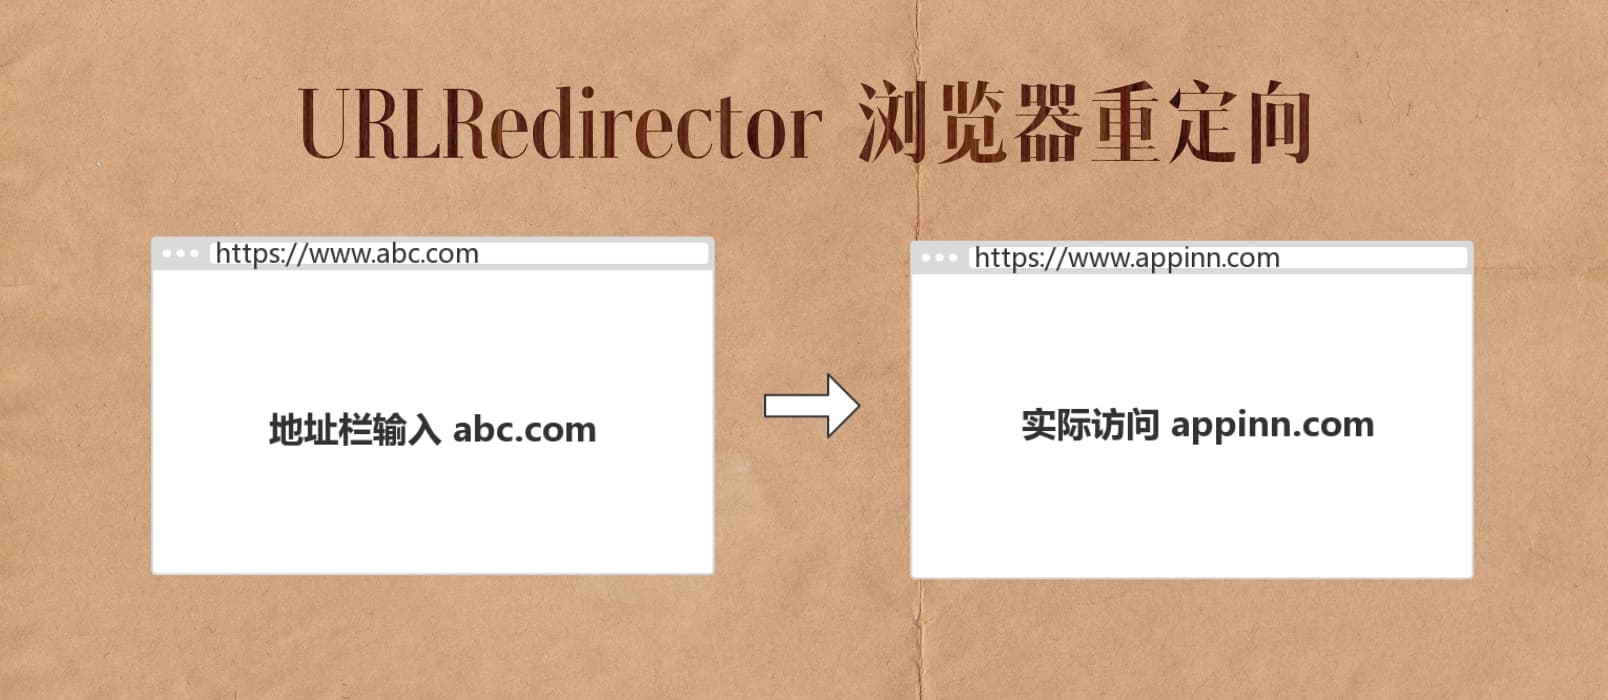 URLRedirector - 网址重定向，解决网站打开慢的顽疾 [Chrome/Firefox/Edge] 1